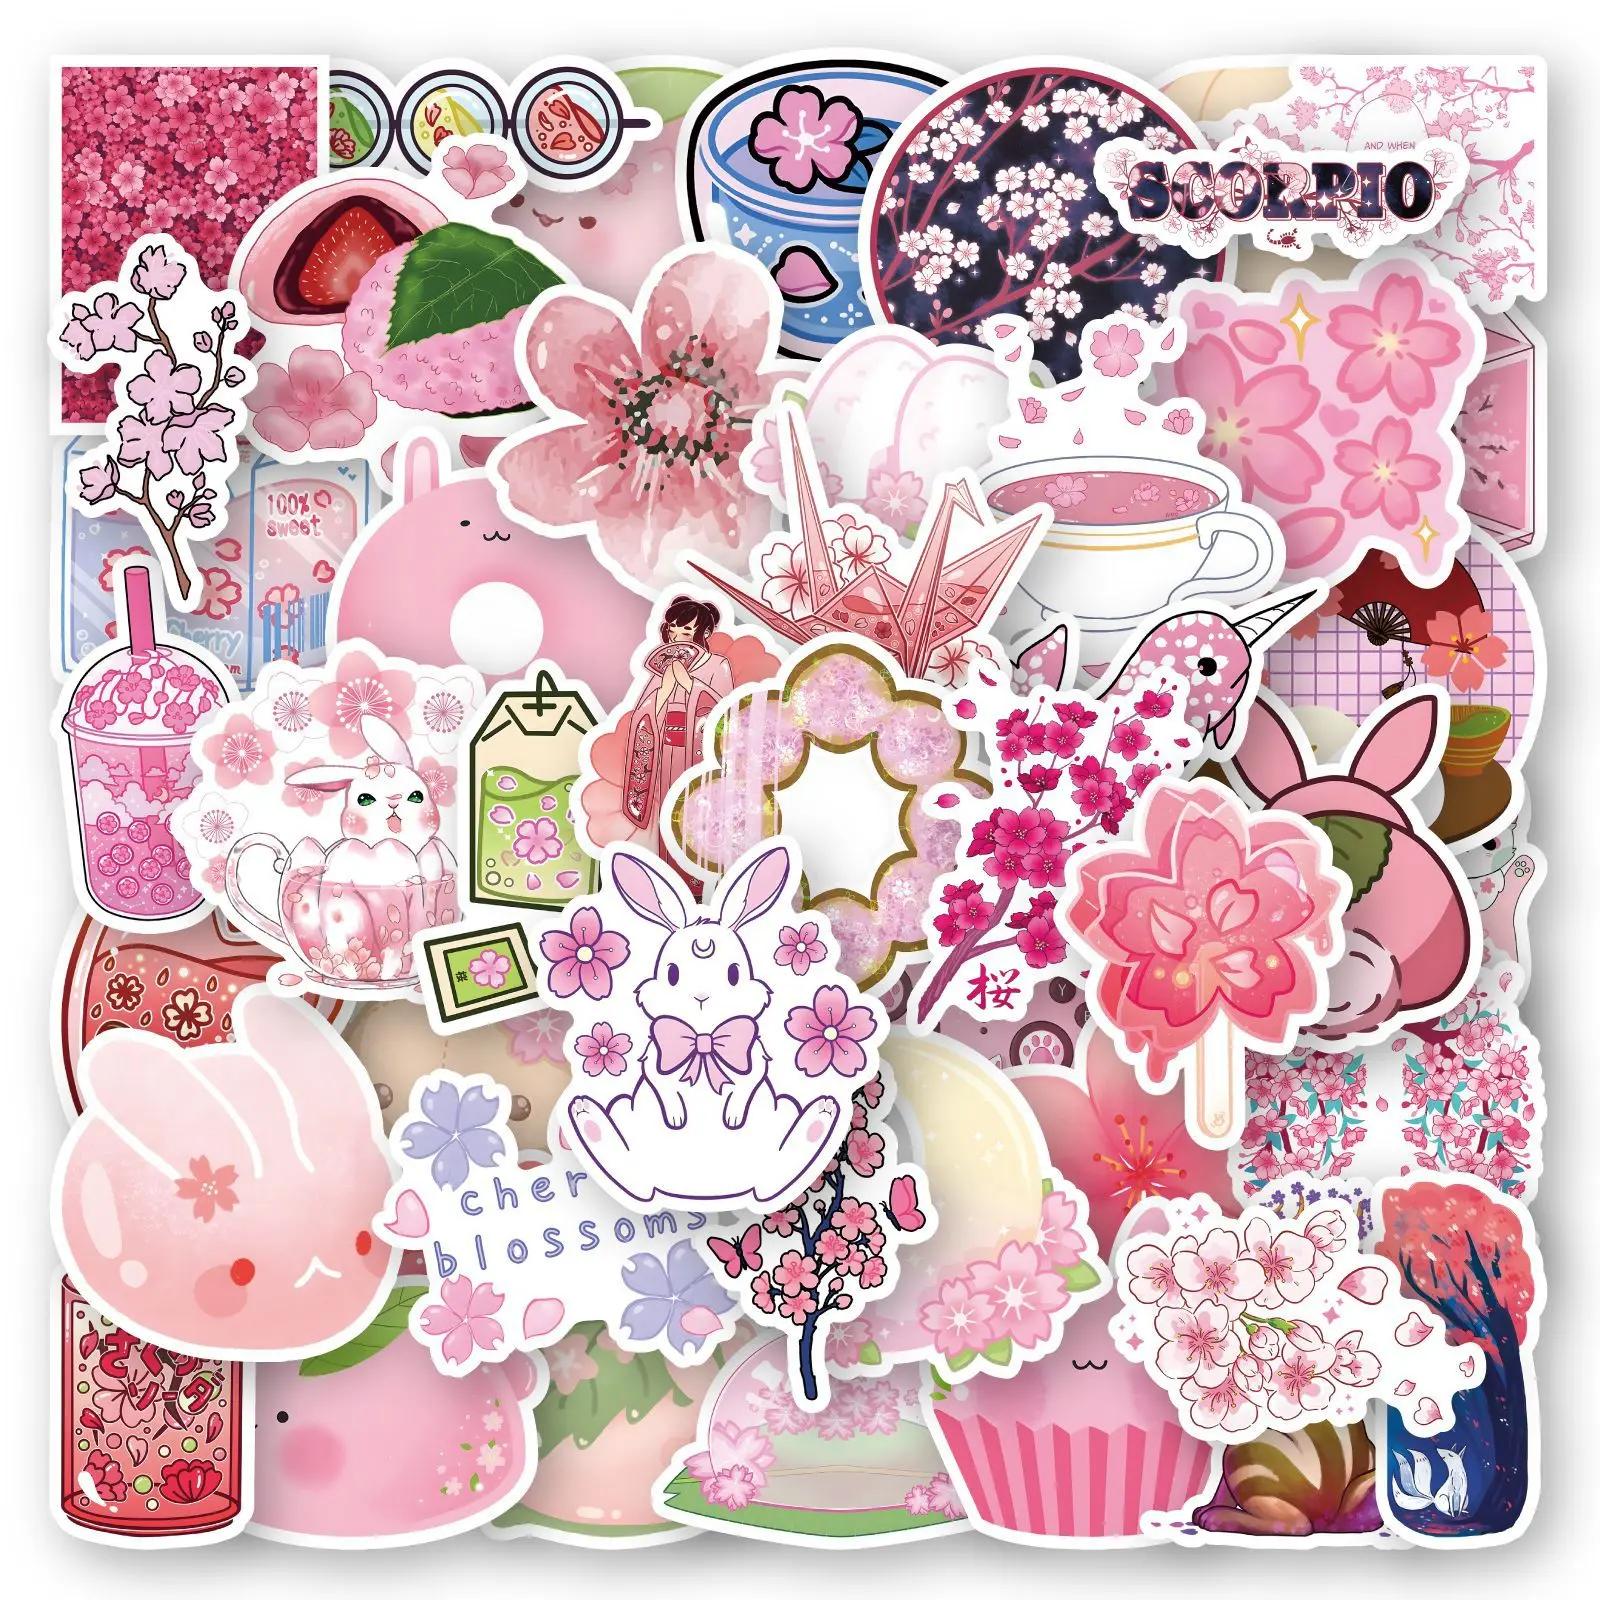 50Pcs Cute Animal Pink sakura Stickers Aesthetic Girls for Notebook Luggage Stationery Phone Cartoon Graffiti Sticker Toys stationery a5 notebook aesthetic